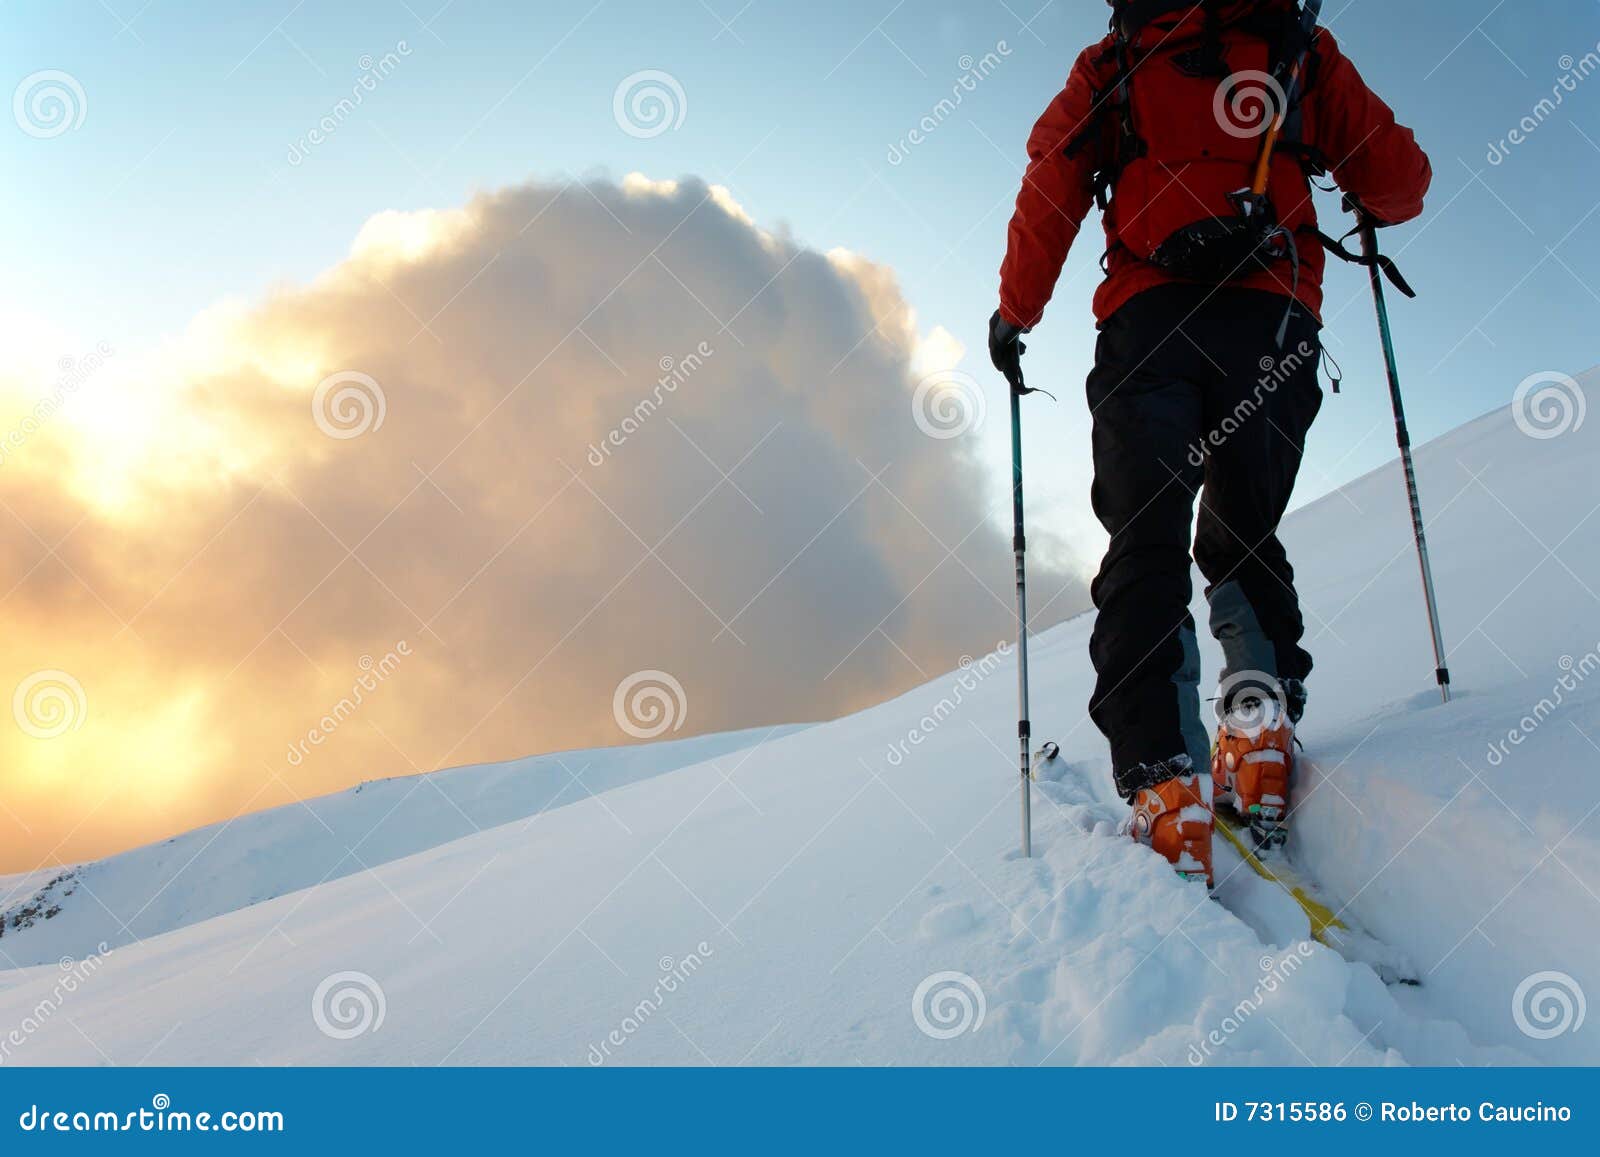 backcountry skier